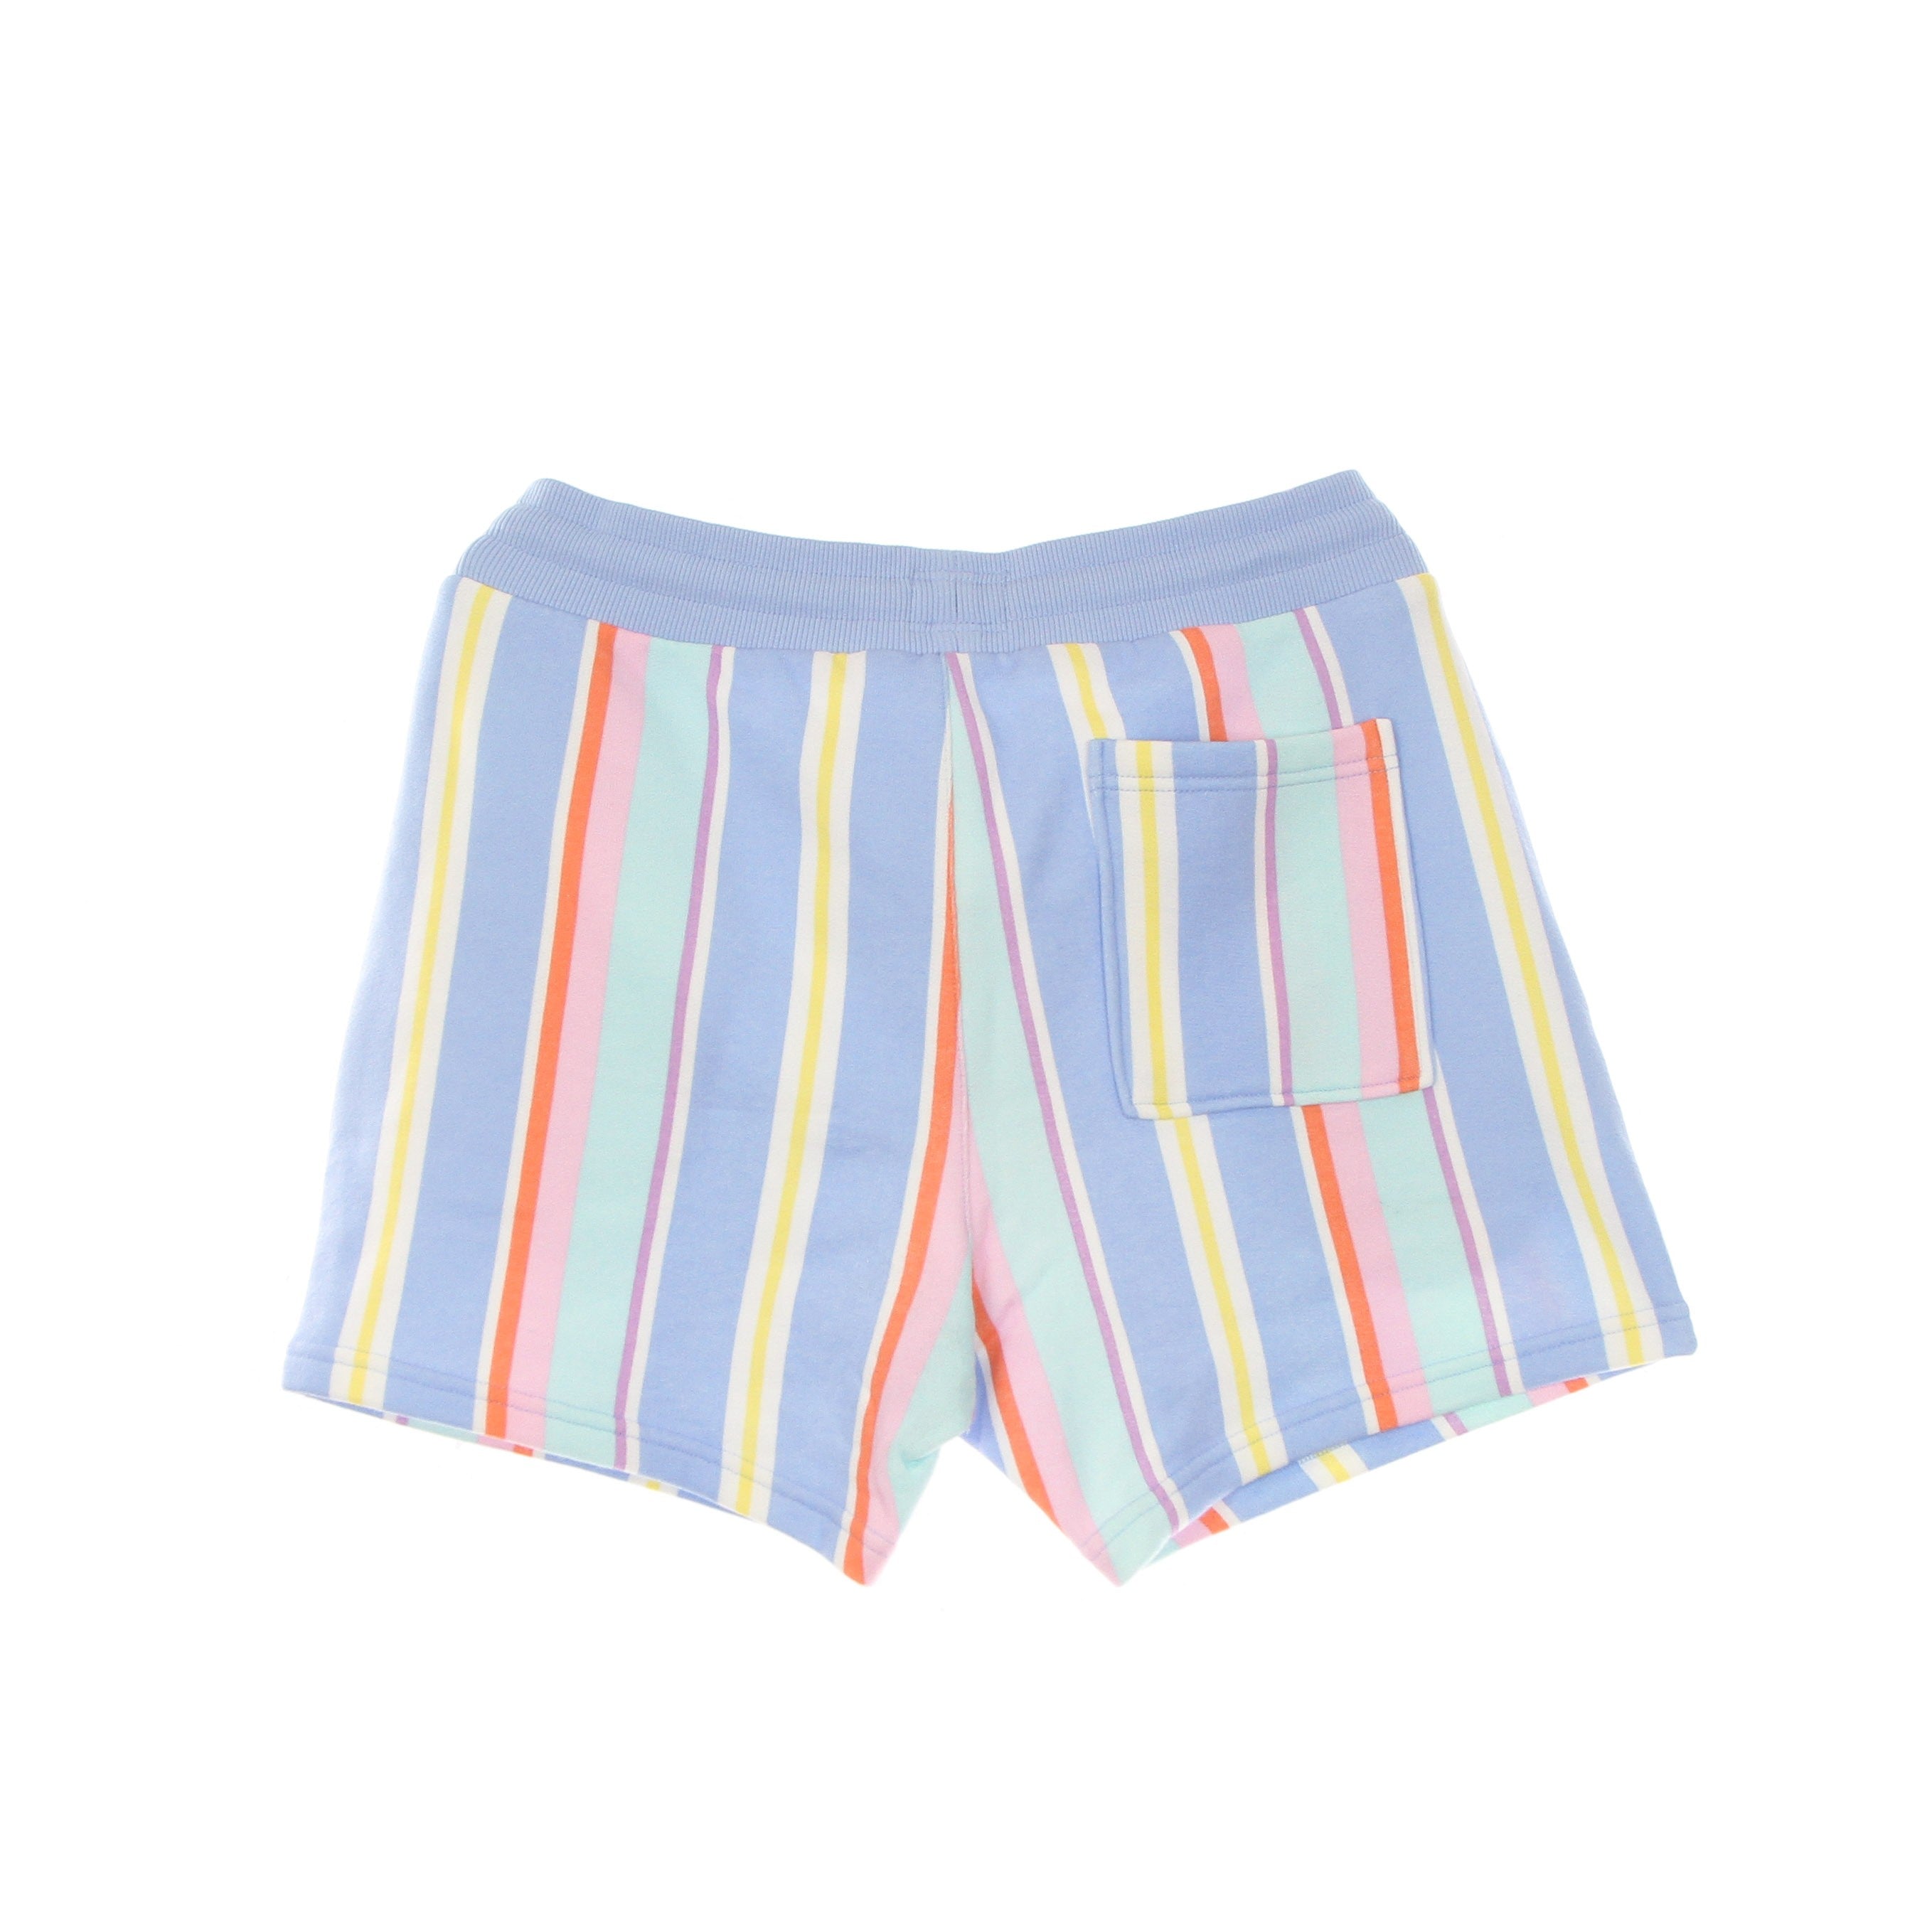 Tommy Hilfiger, Pantaloncino Uomo Pastel Mixed Vertical Stripe Sweat Shorts, Light Powdery Blue/stripe